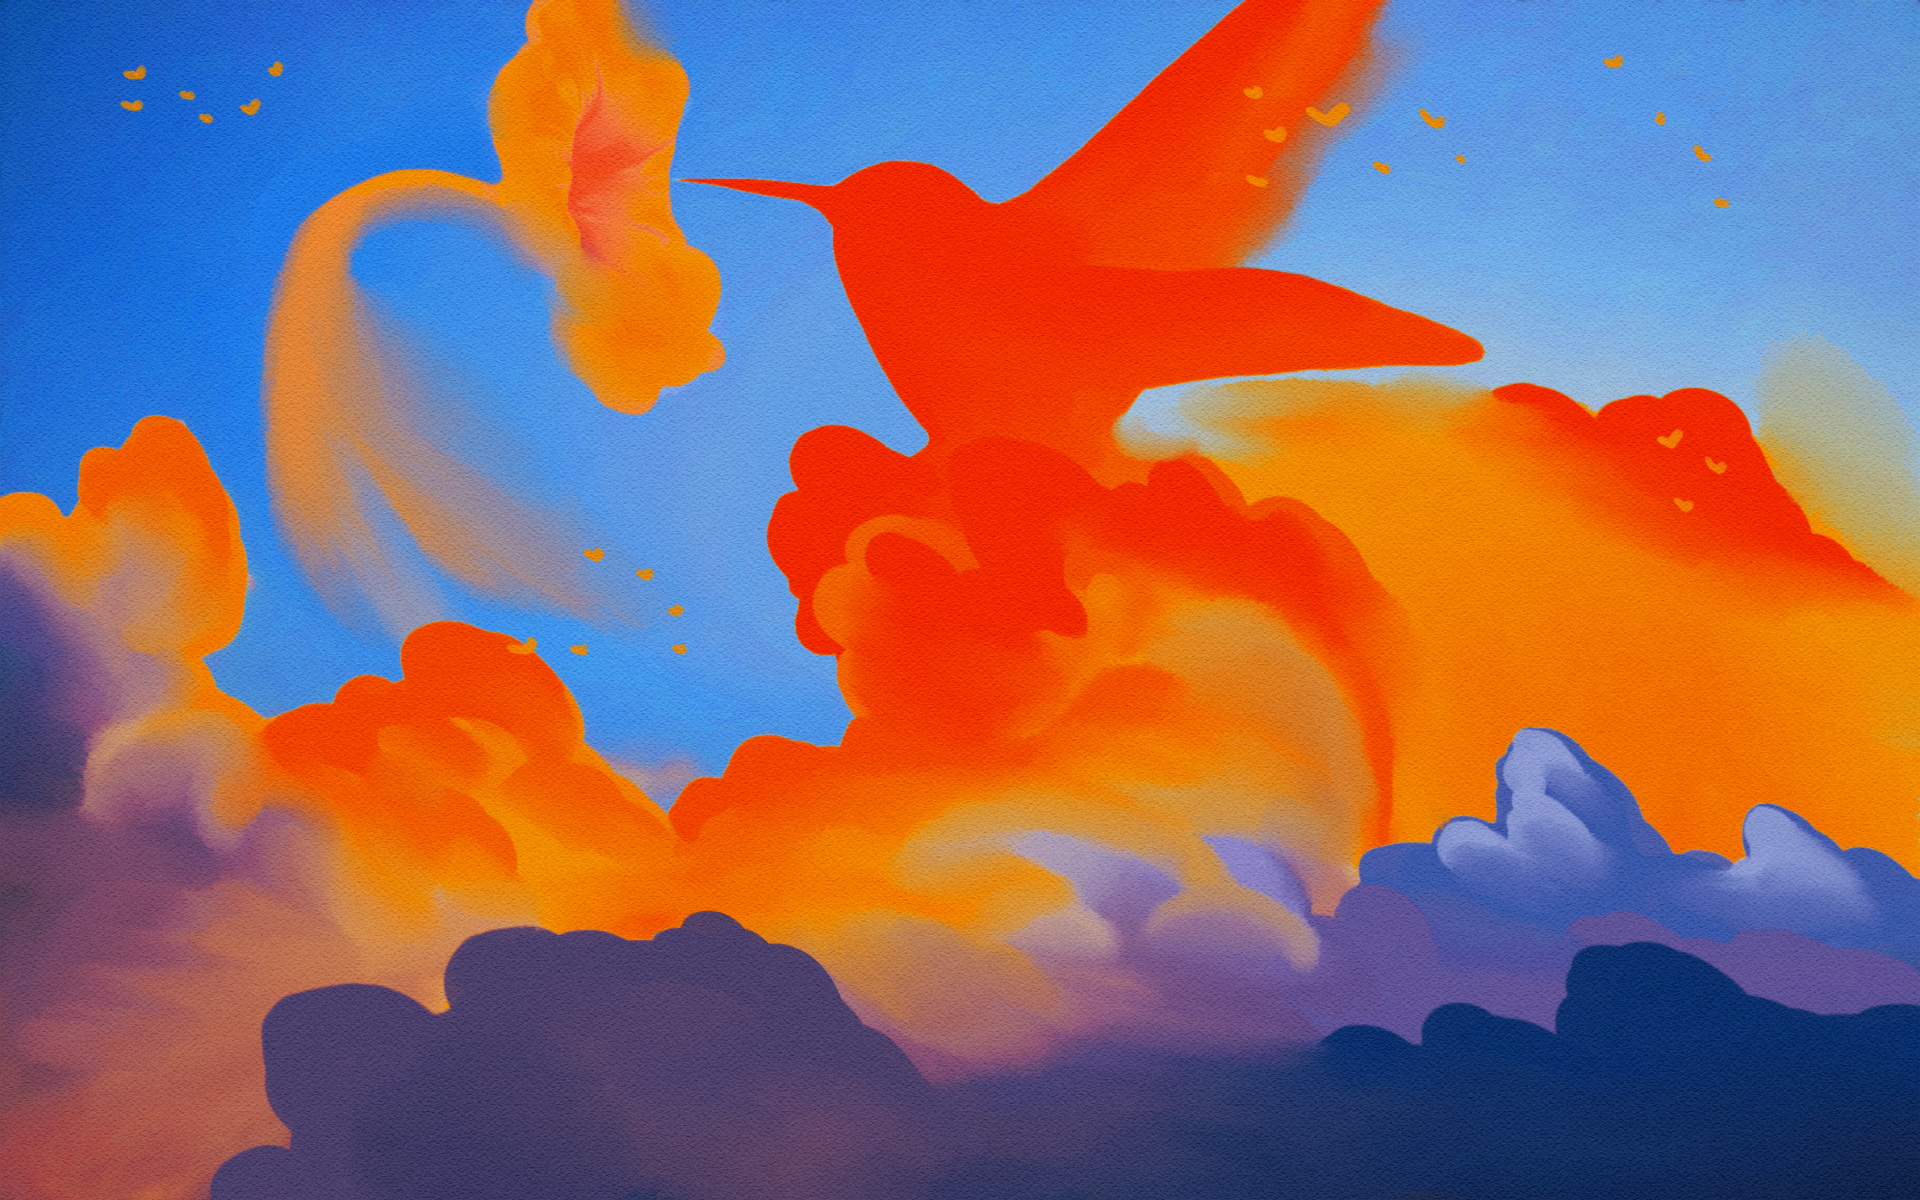 Синяя птица облака. Птицы в облаках. Птица в облаках арт. Бабочки птицы облака рисунок. Птицы фантастические аппликация.